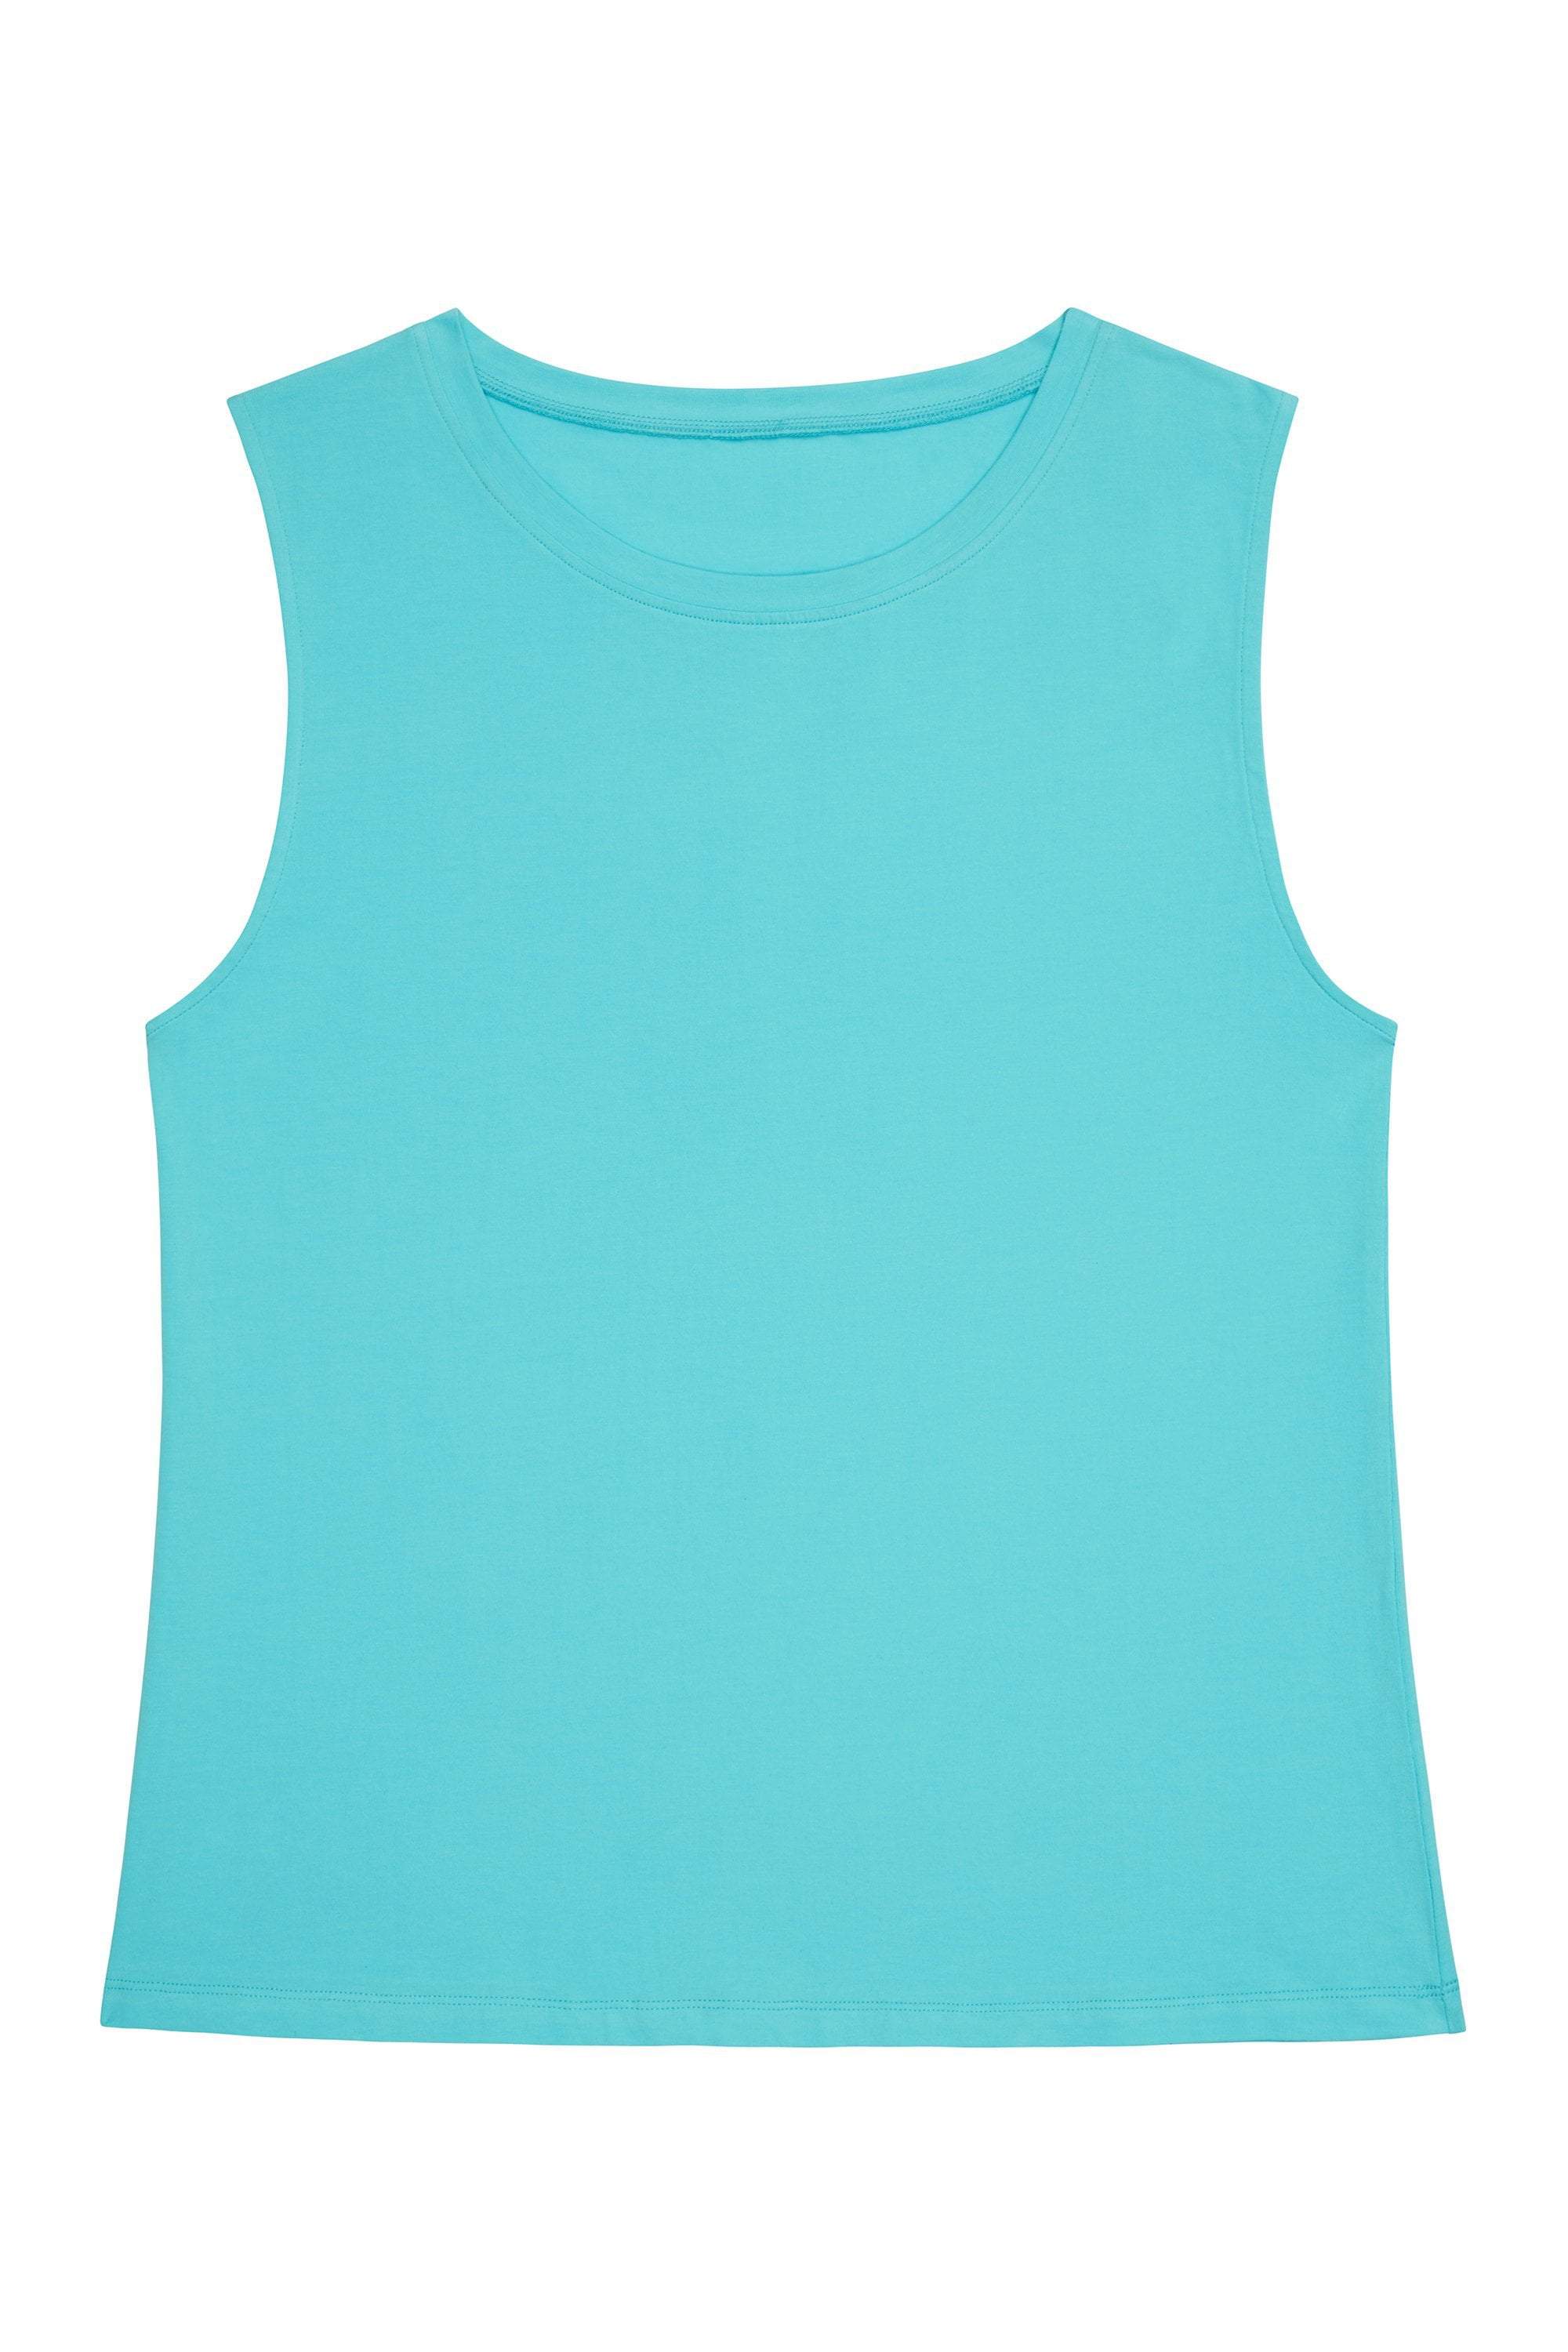 blue gym vest